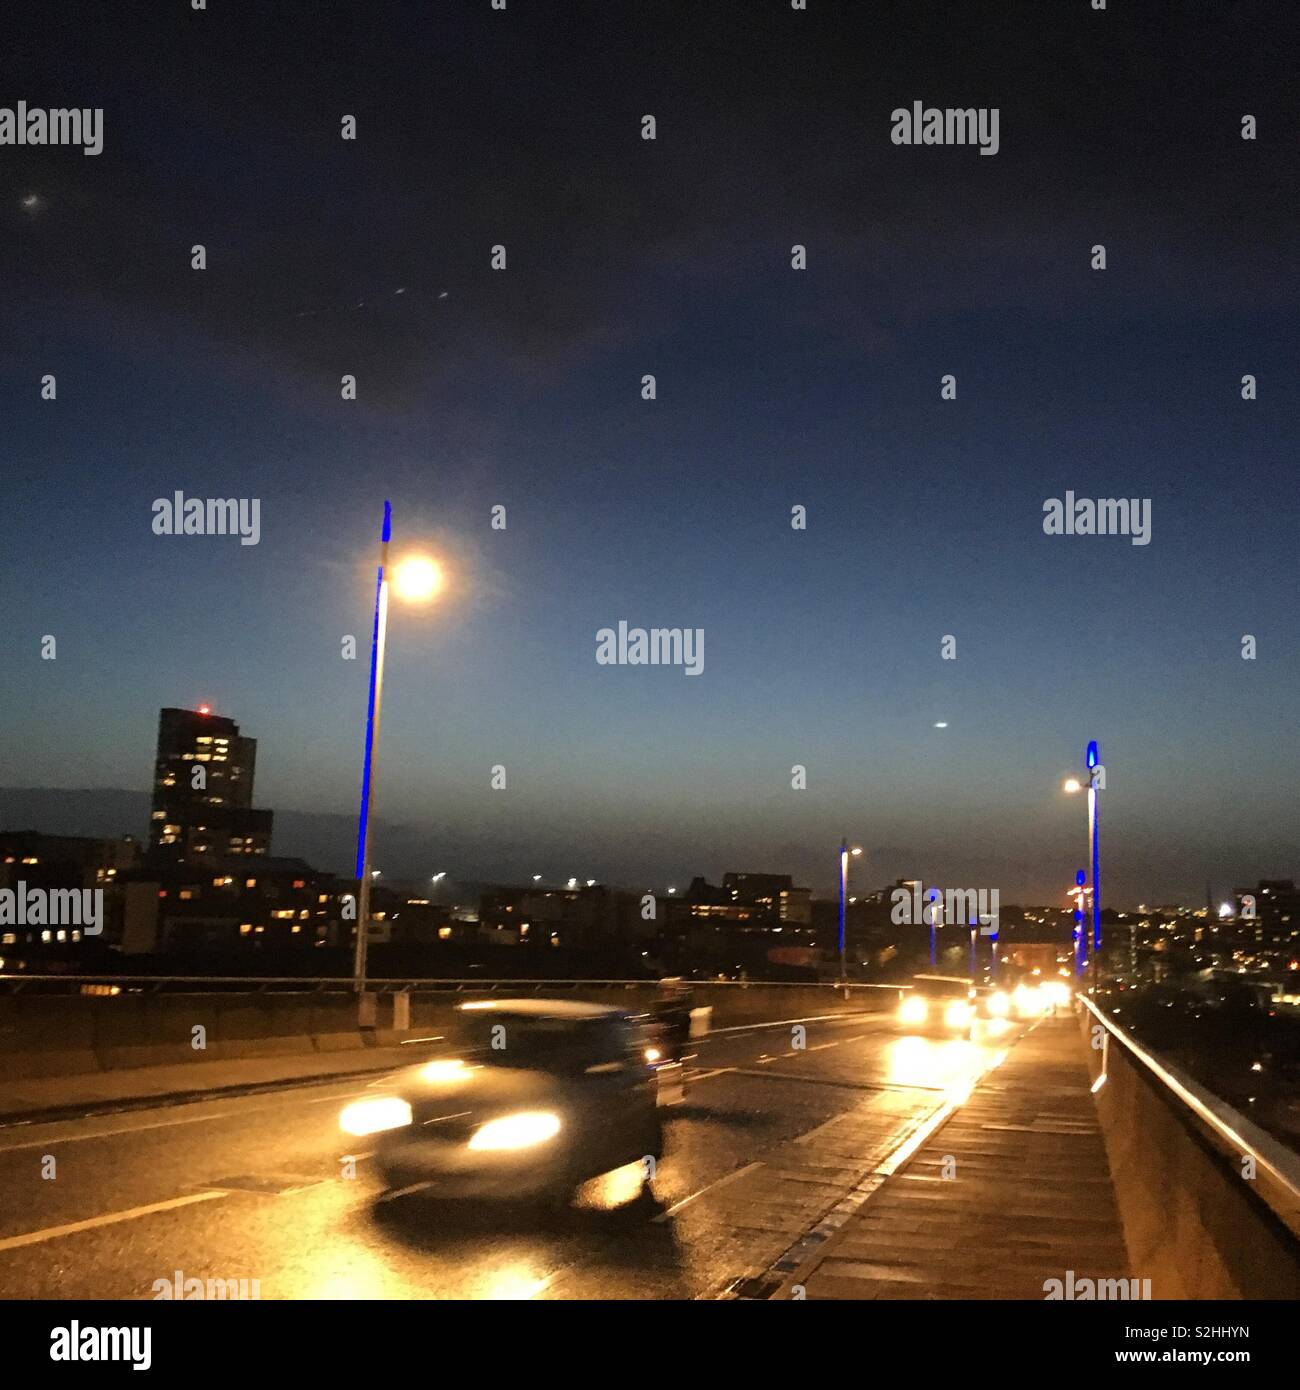 Dunkle Abende sind fast vorbei! Twilight Zyklus pendeln Home Über Itchen Brücke in Southampton Stockfoto